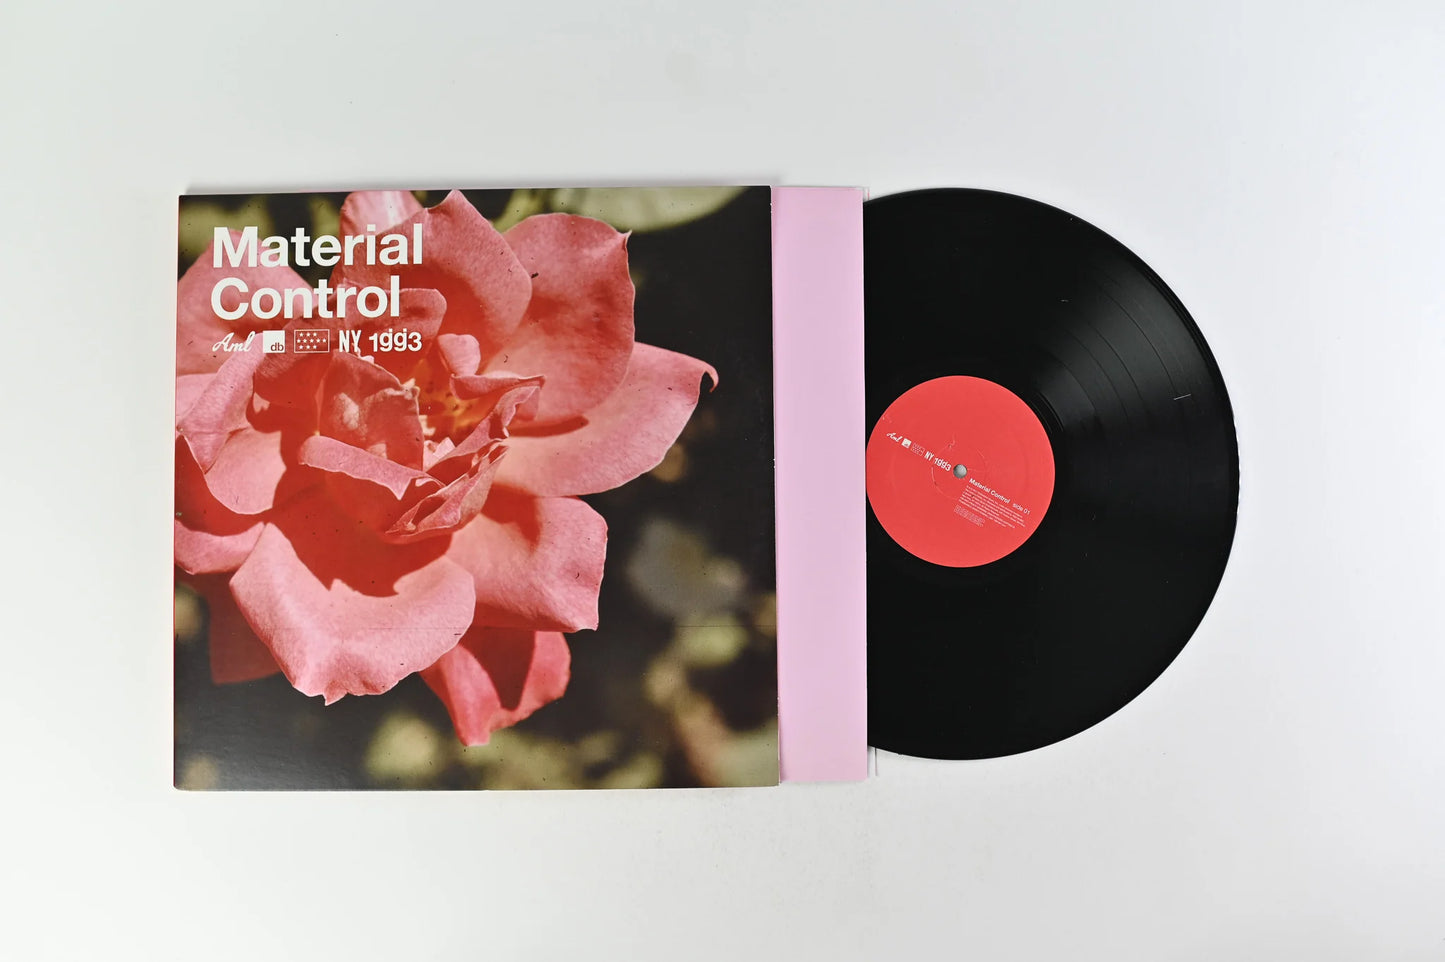 Glassjaw - Material Control (180g Black Vinyl)